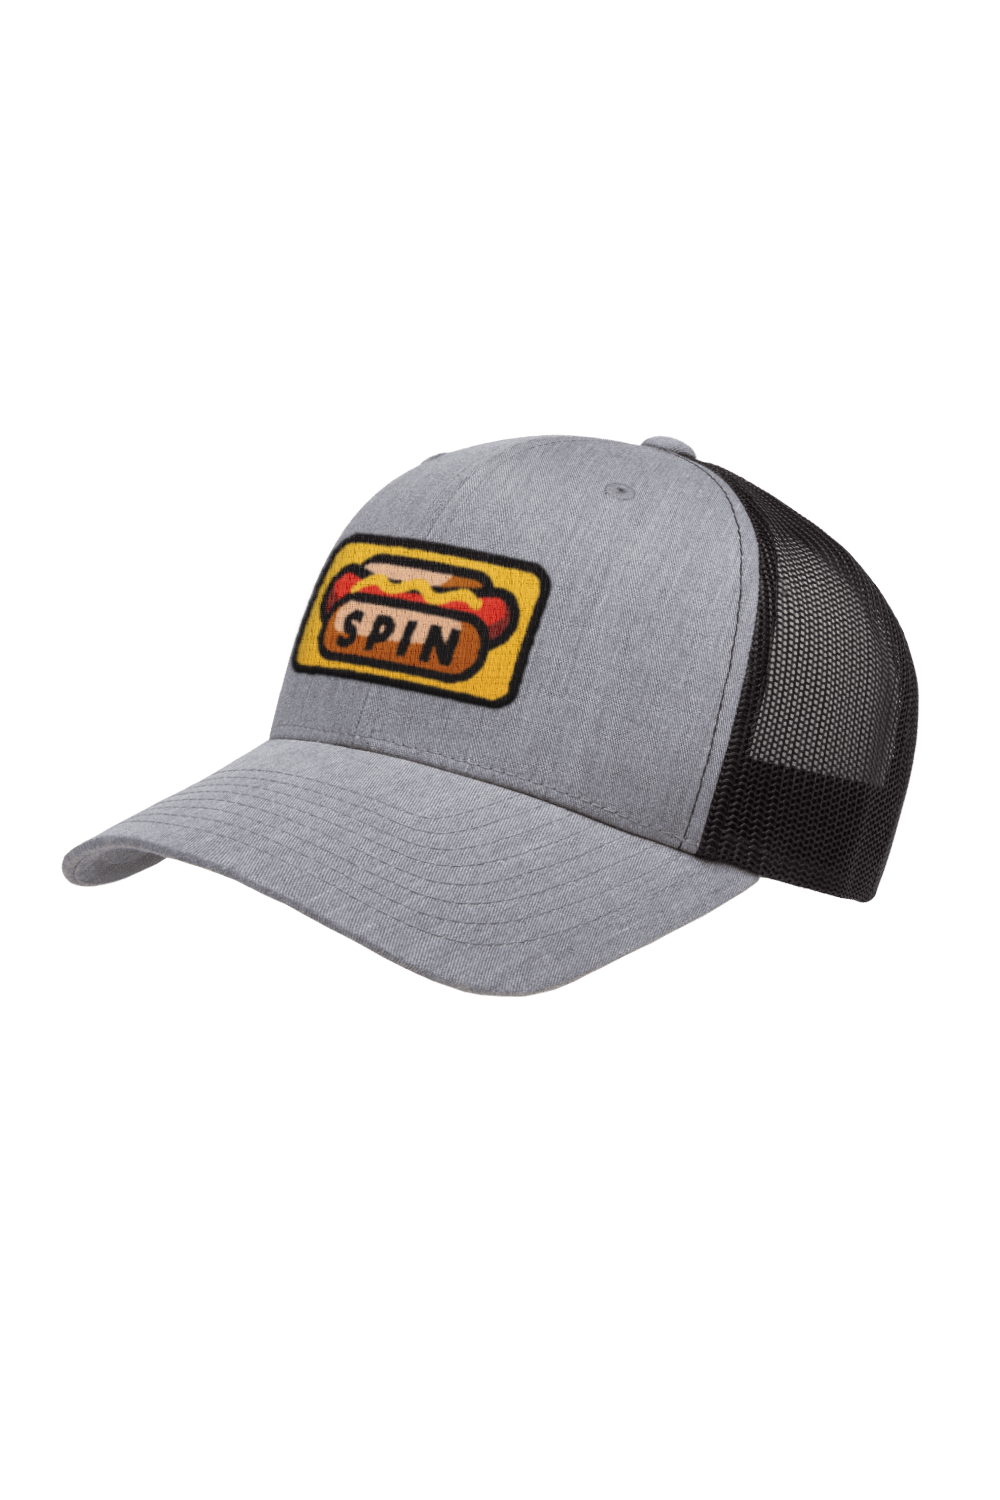 Hot Dog Trucker Hat